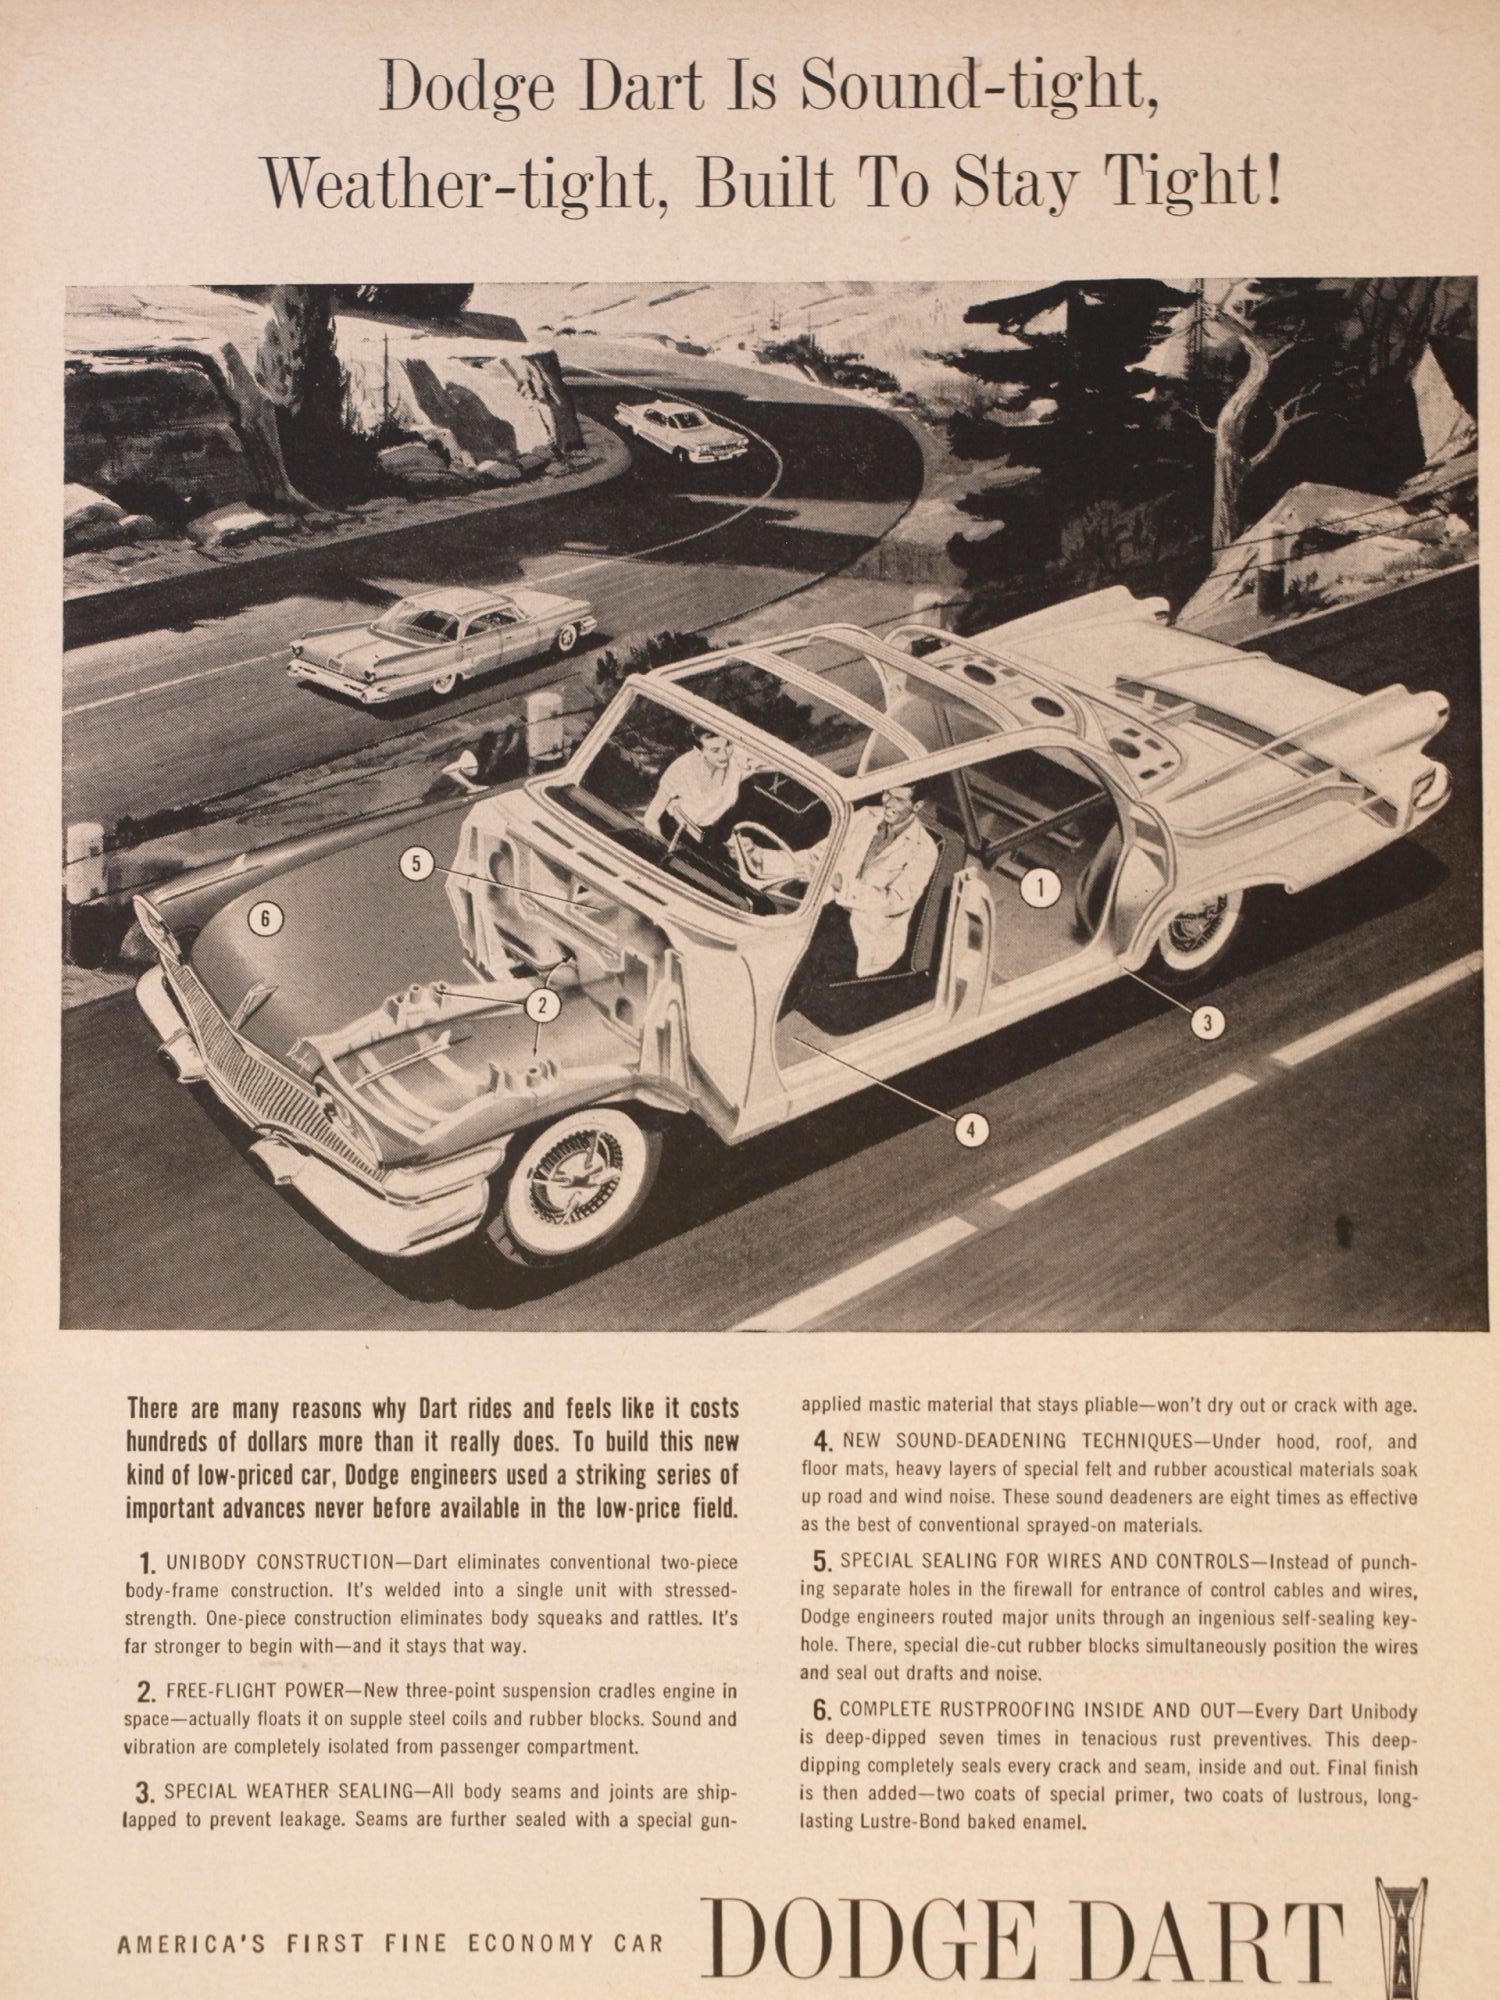 Vintage Dodge advertisement